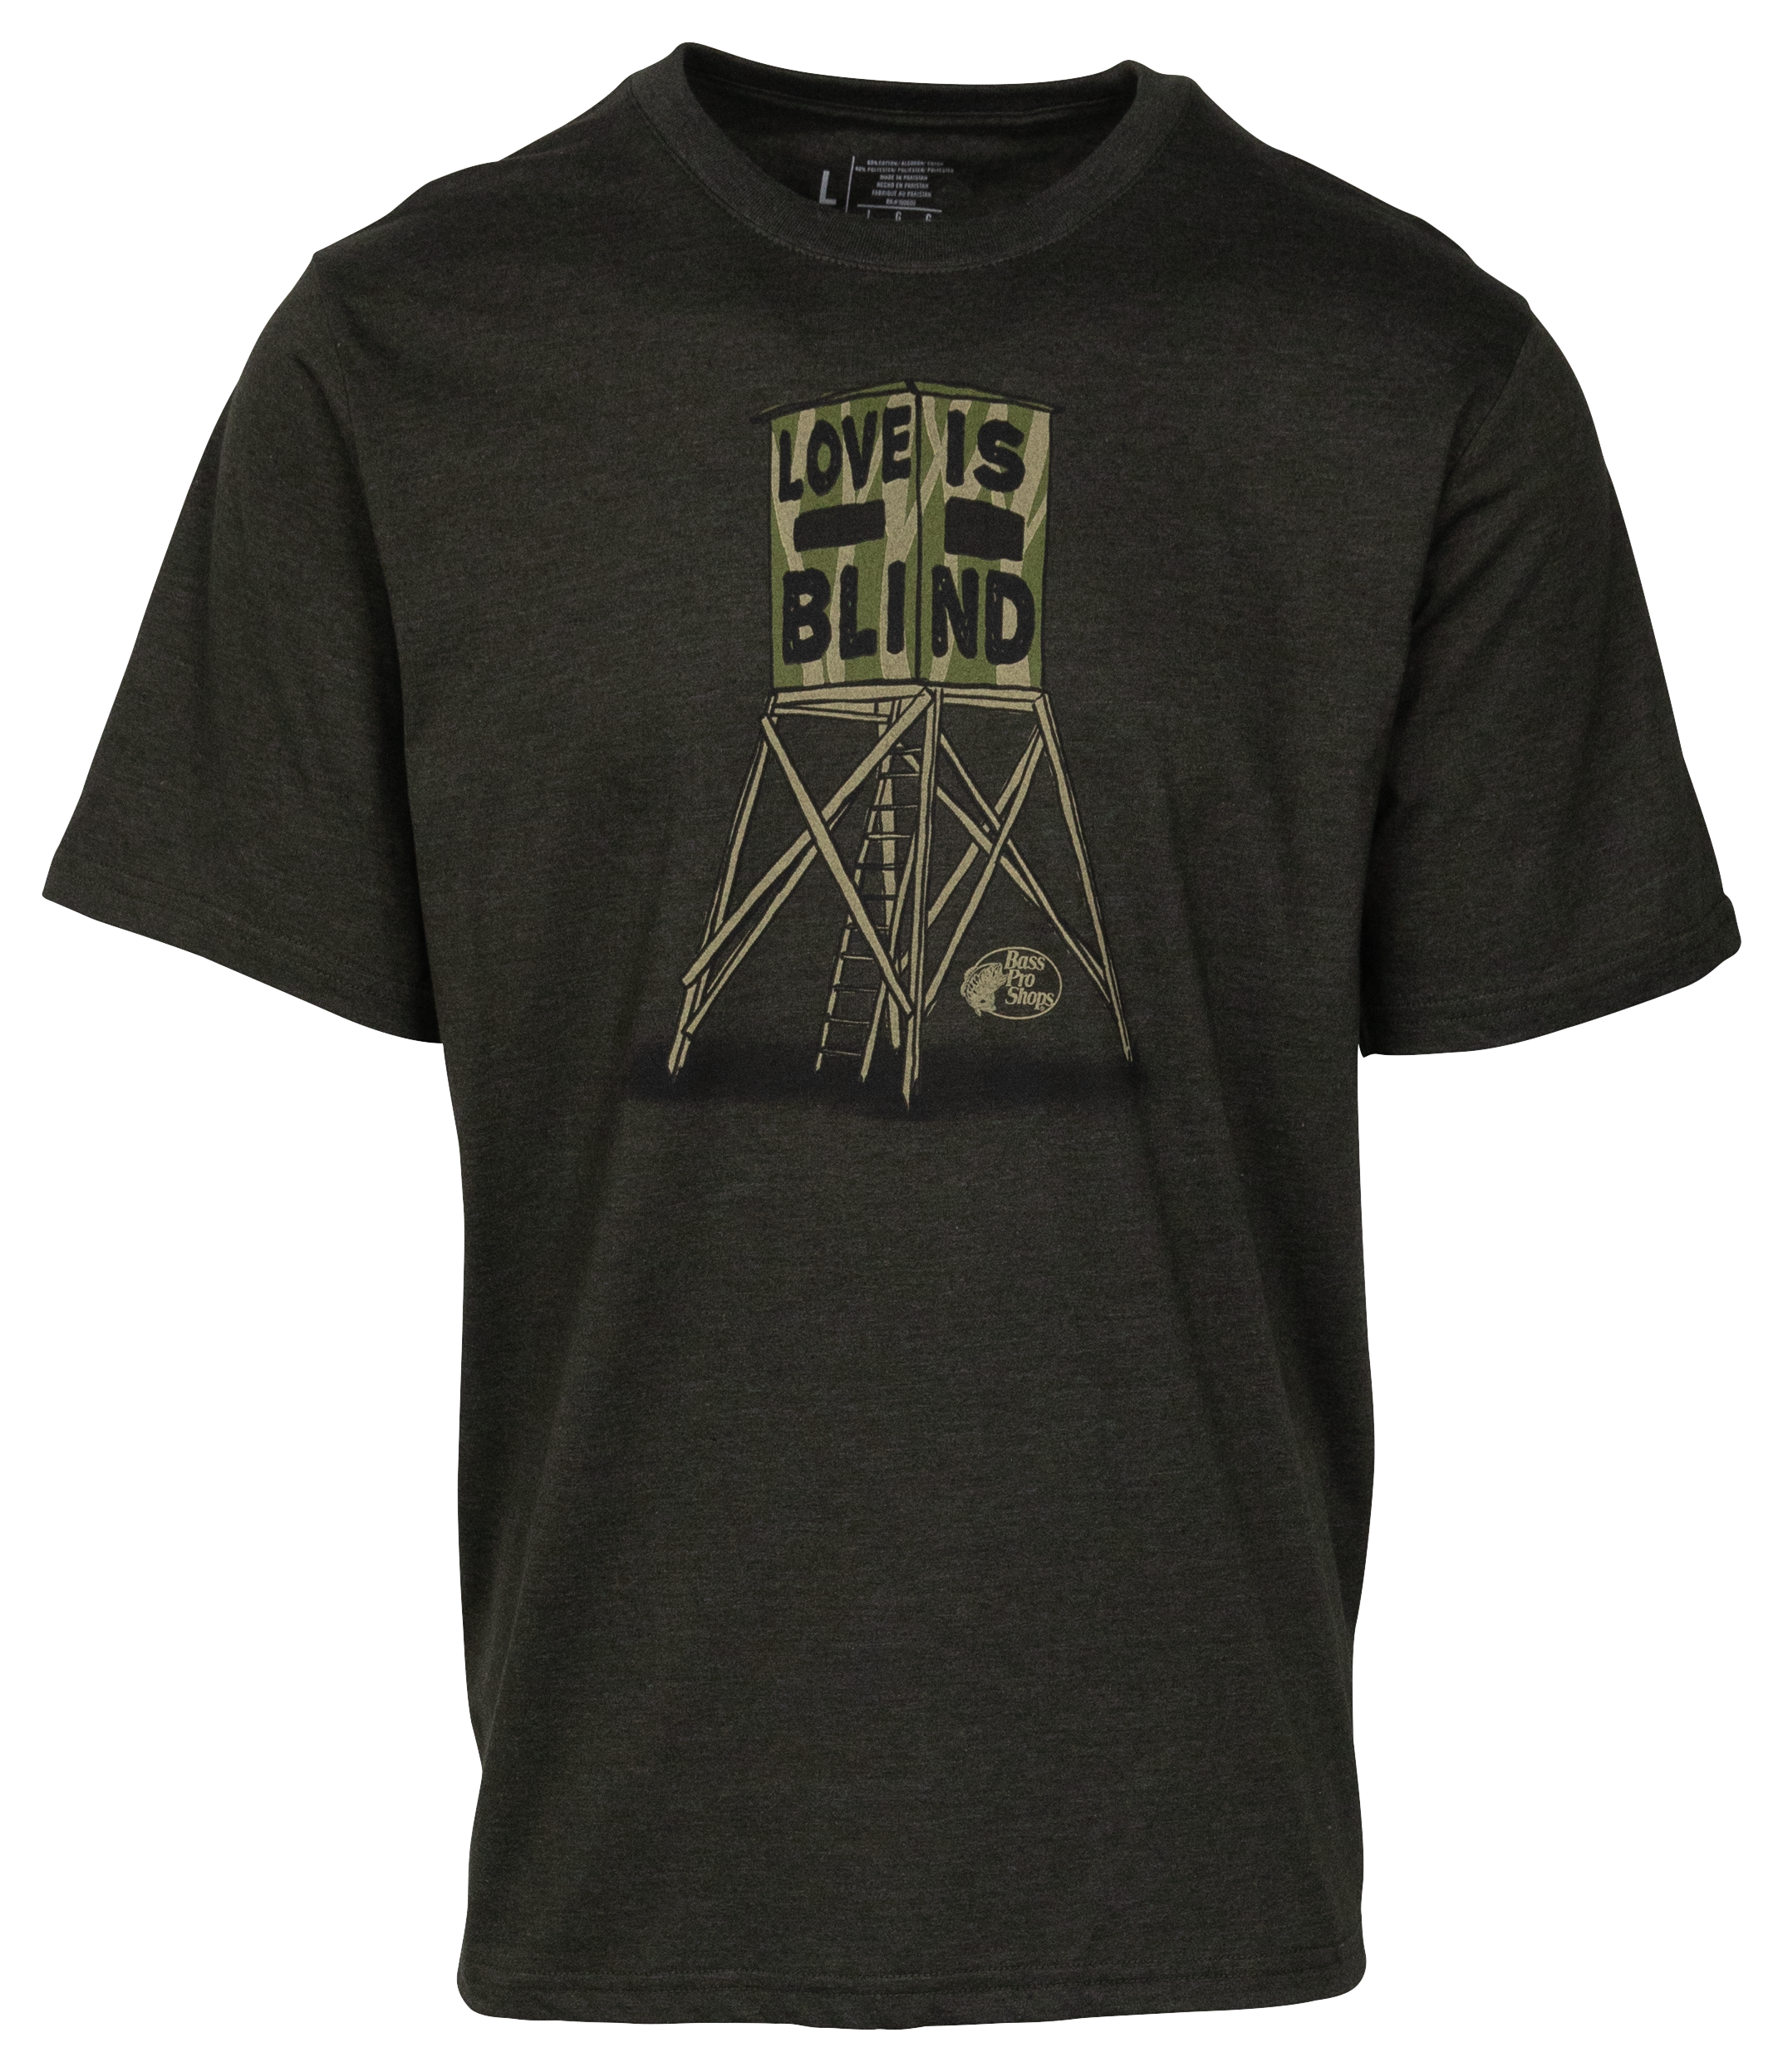 Bass Pro Shops Love Is Blind Short-Sleeve T-Shirt for Men - Olive Heather - 3XL